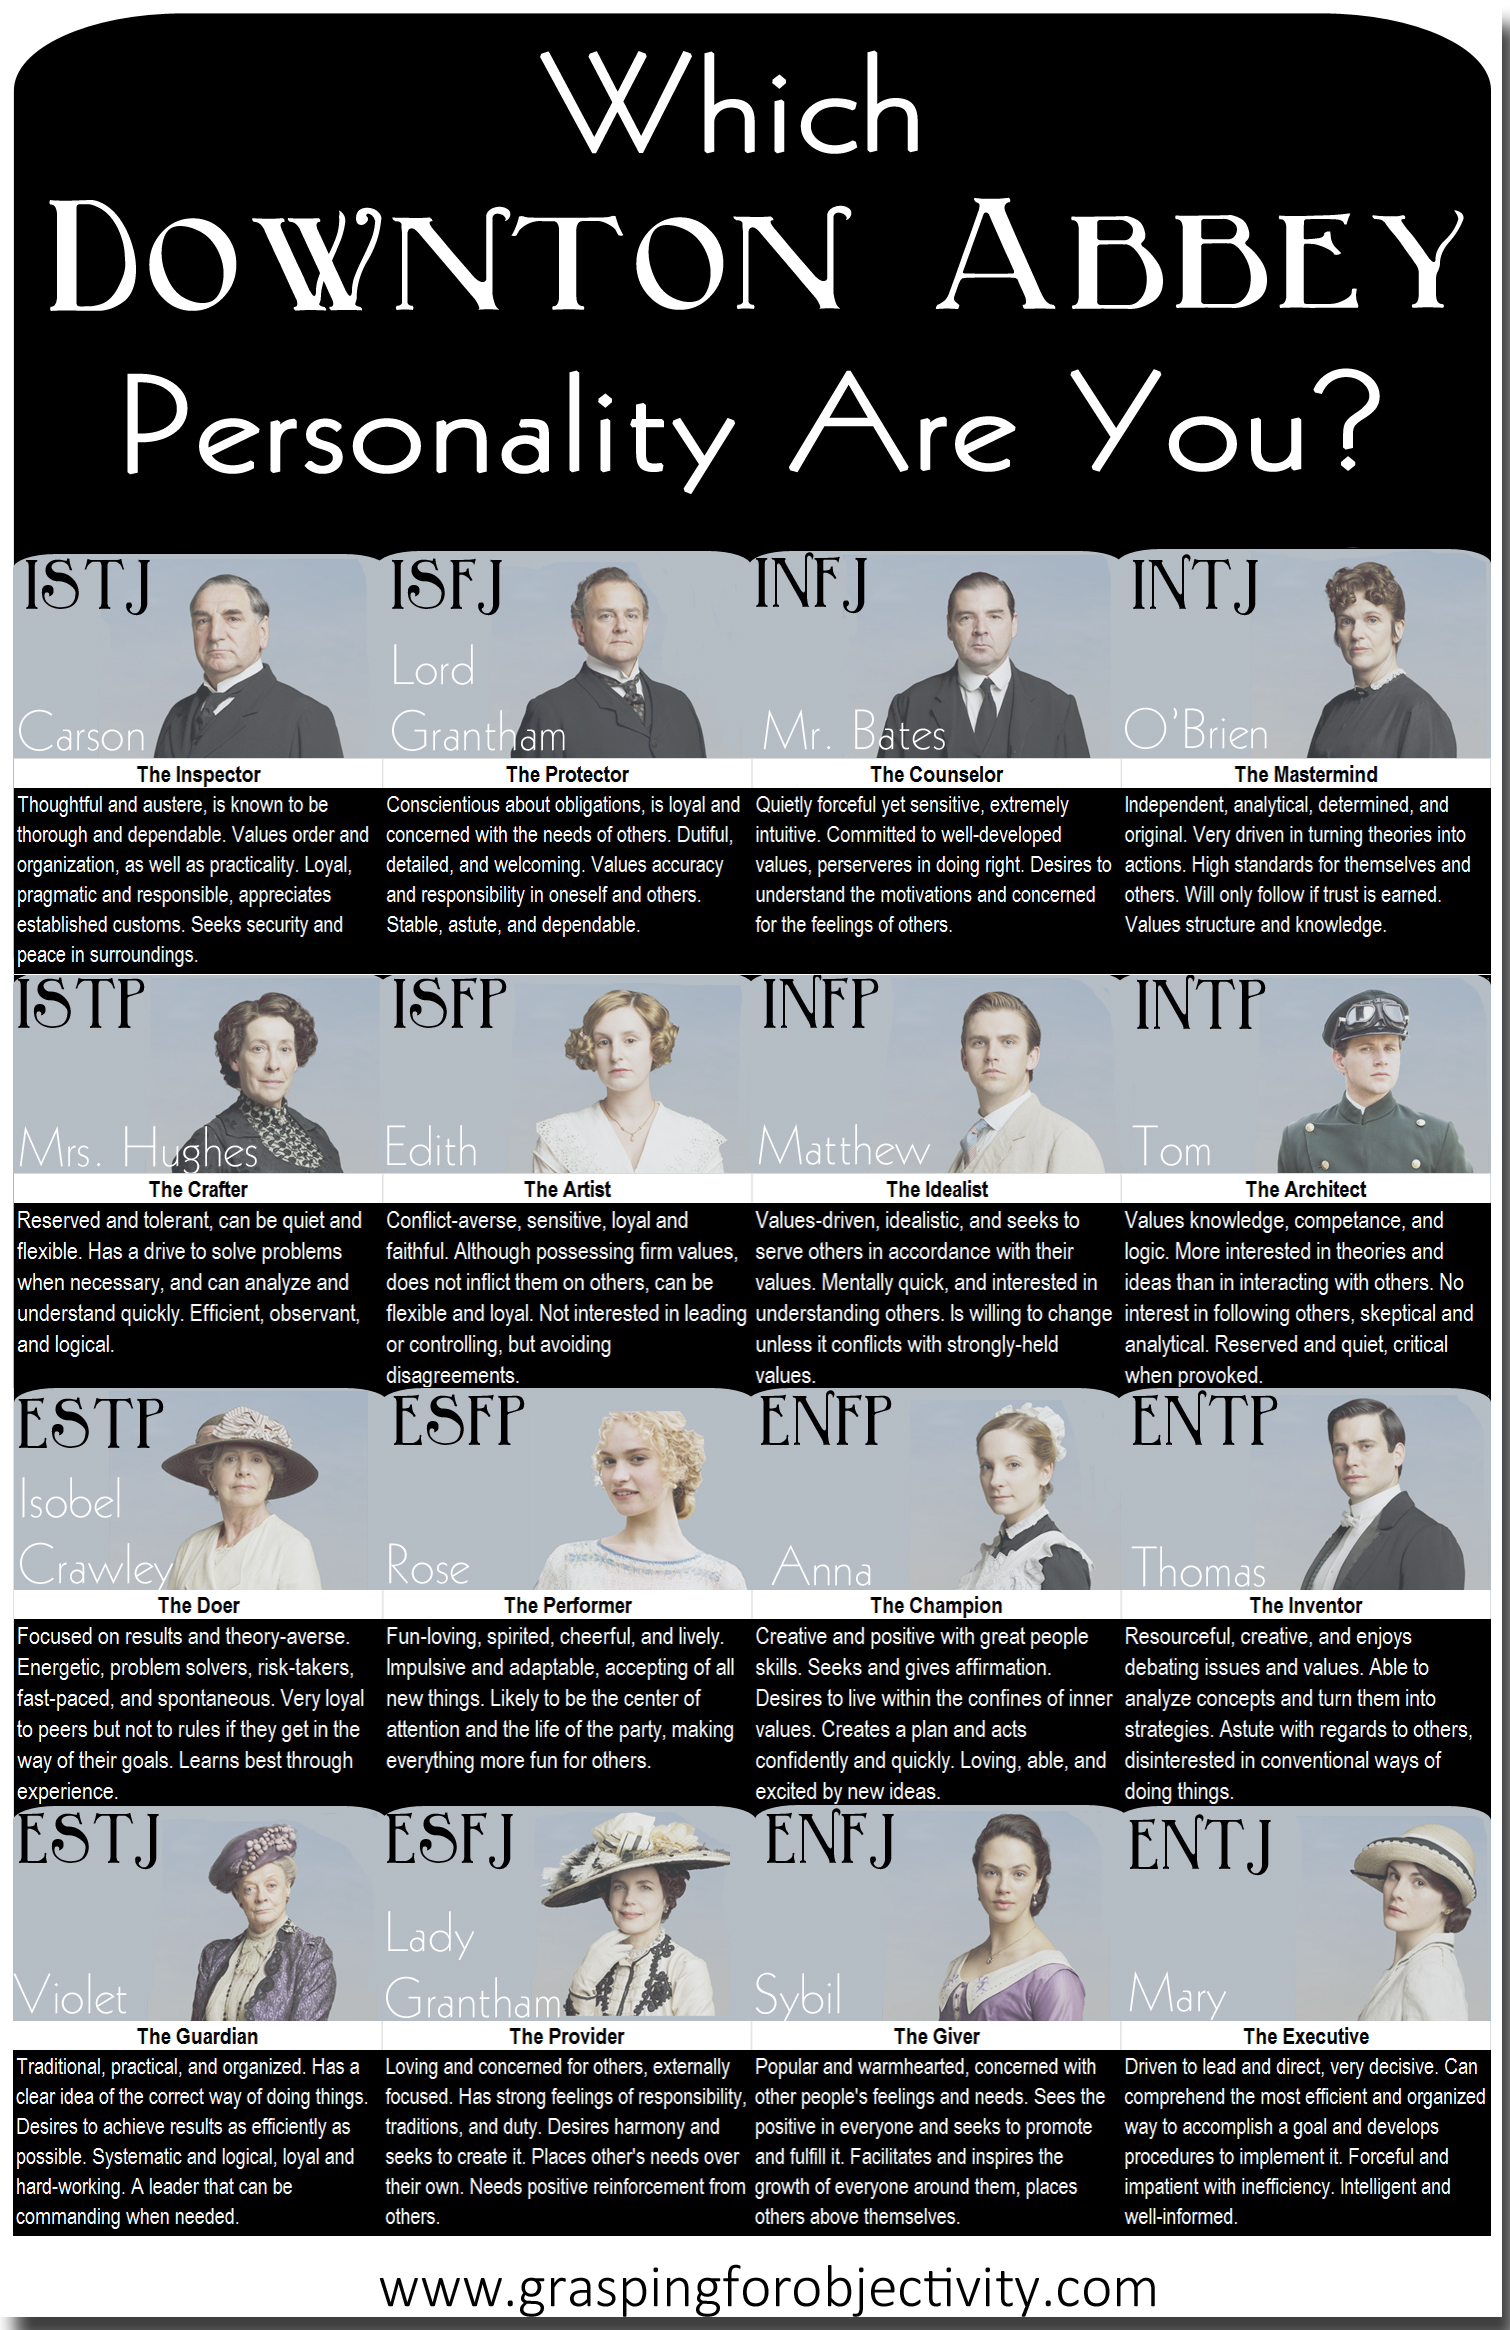 Matt MBTI Personality Type: ESFP or ESFJ?